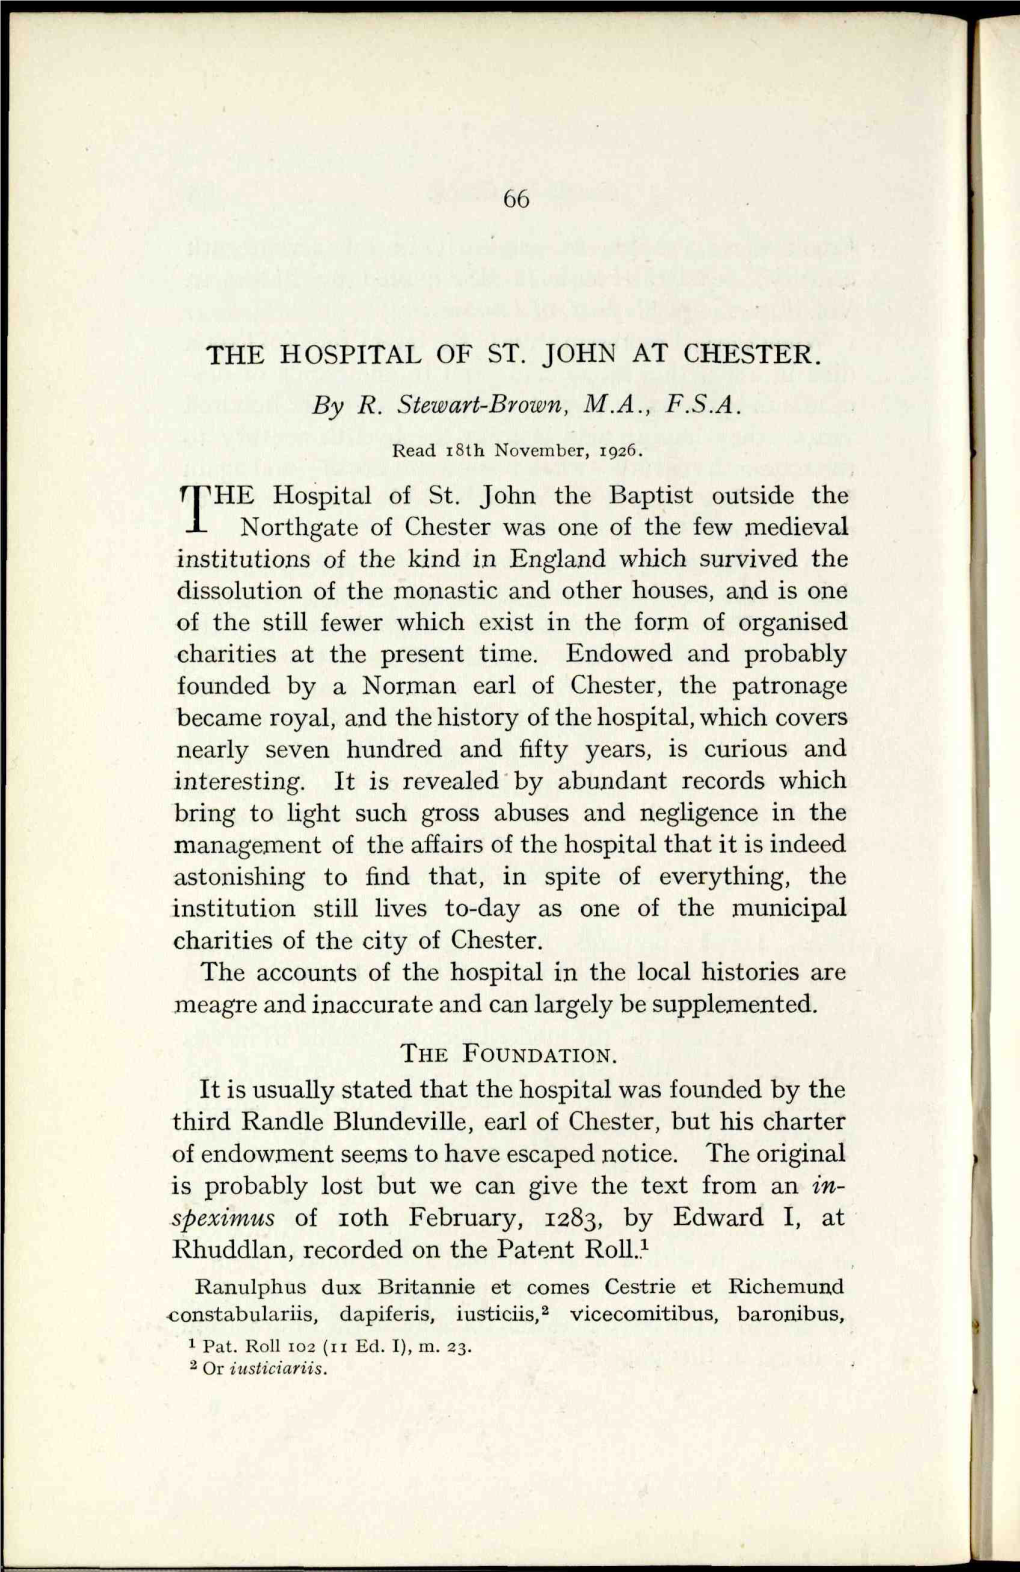 The Hospital of St. John at Chester